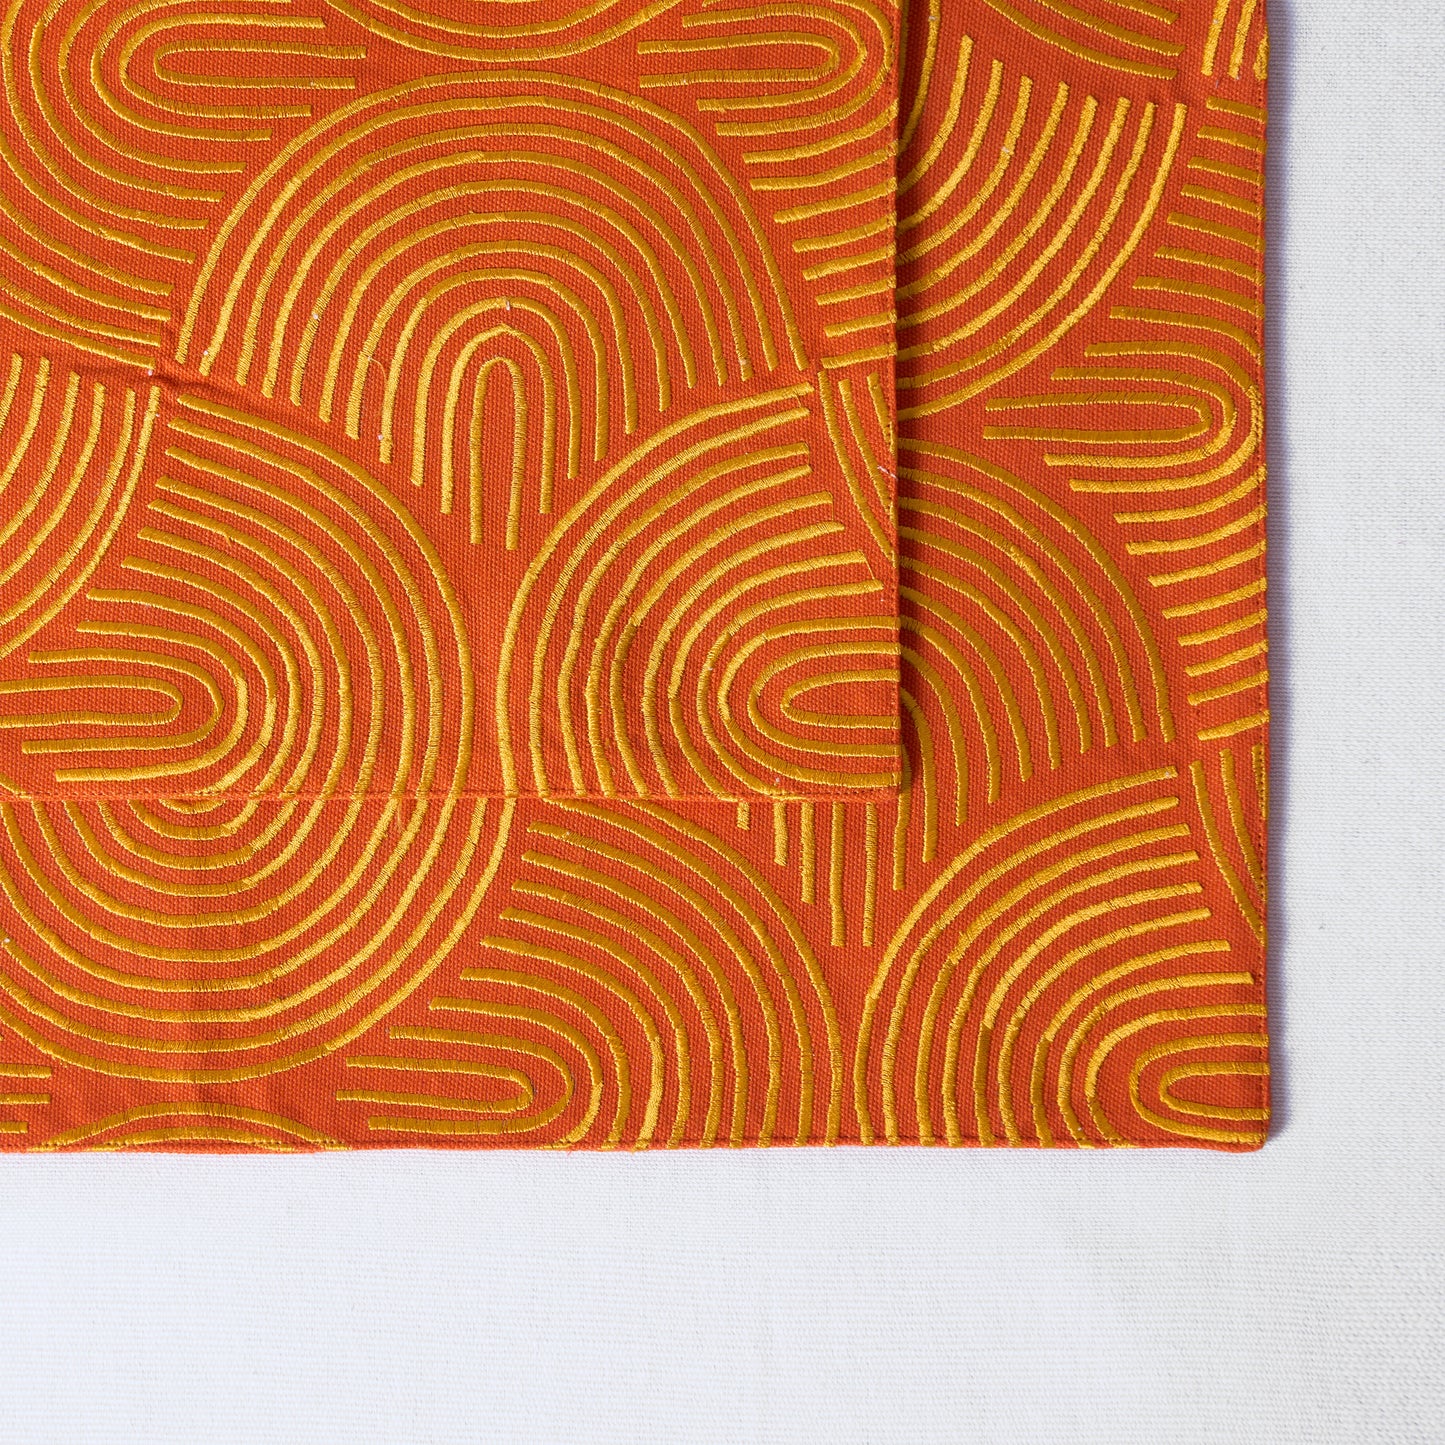 KASHIDAKAARI - Tangerine, modern retro, geometrical pattern, embroidered placemats